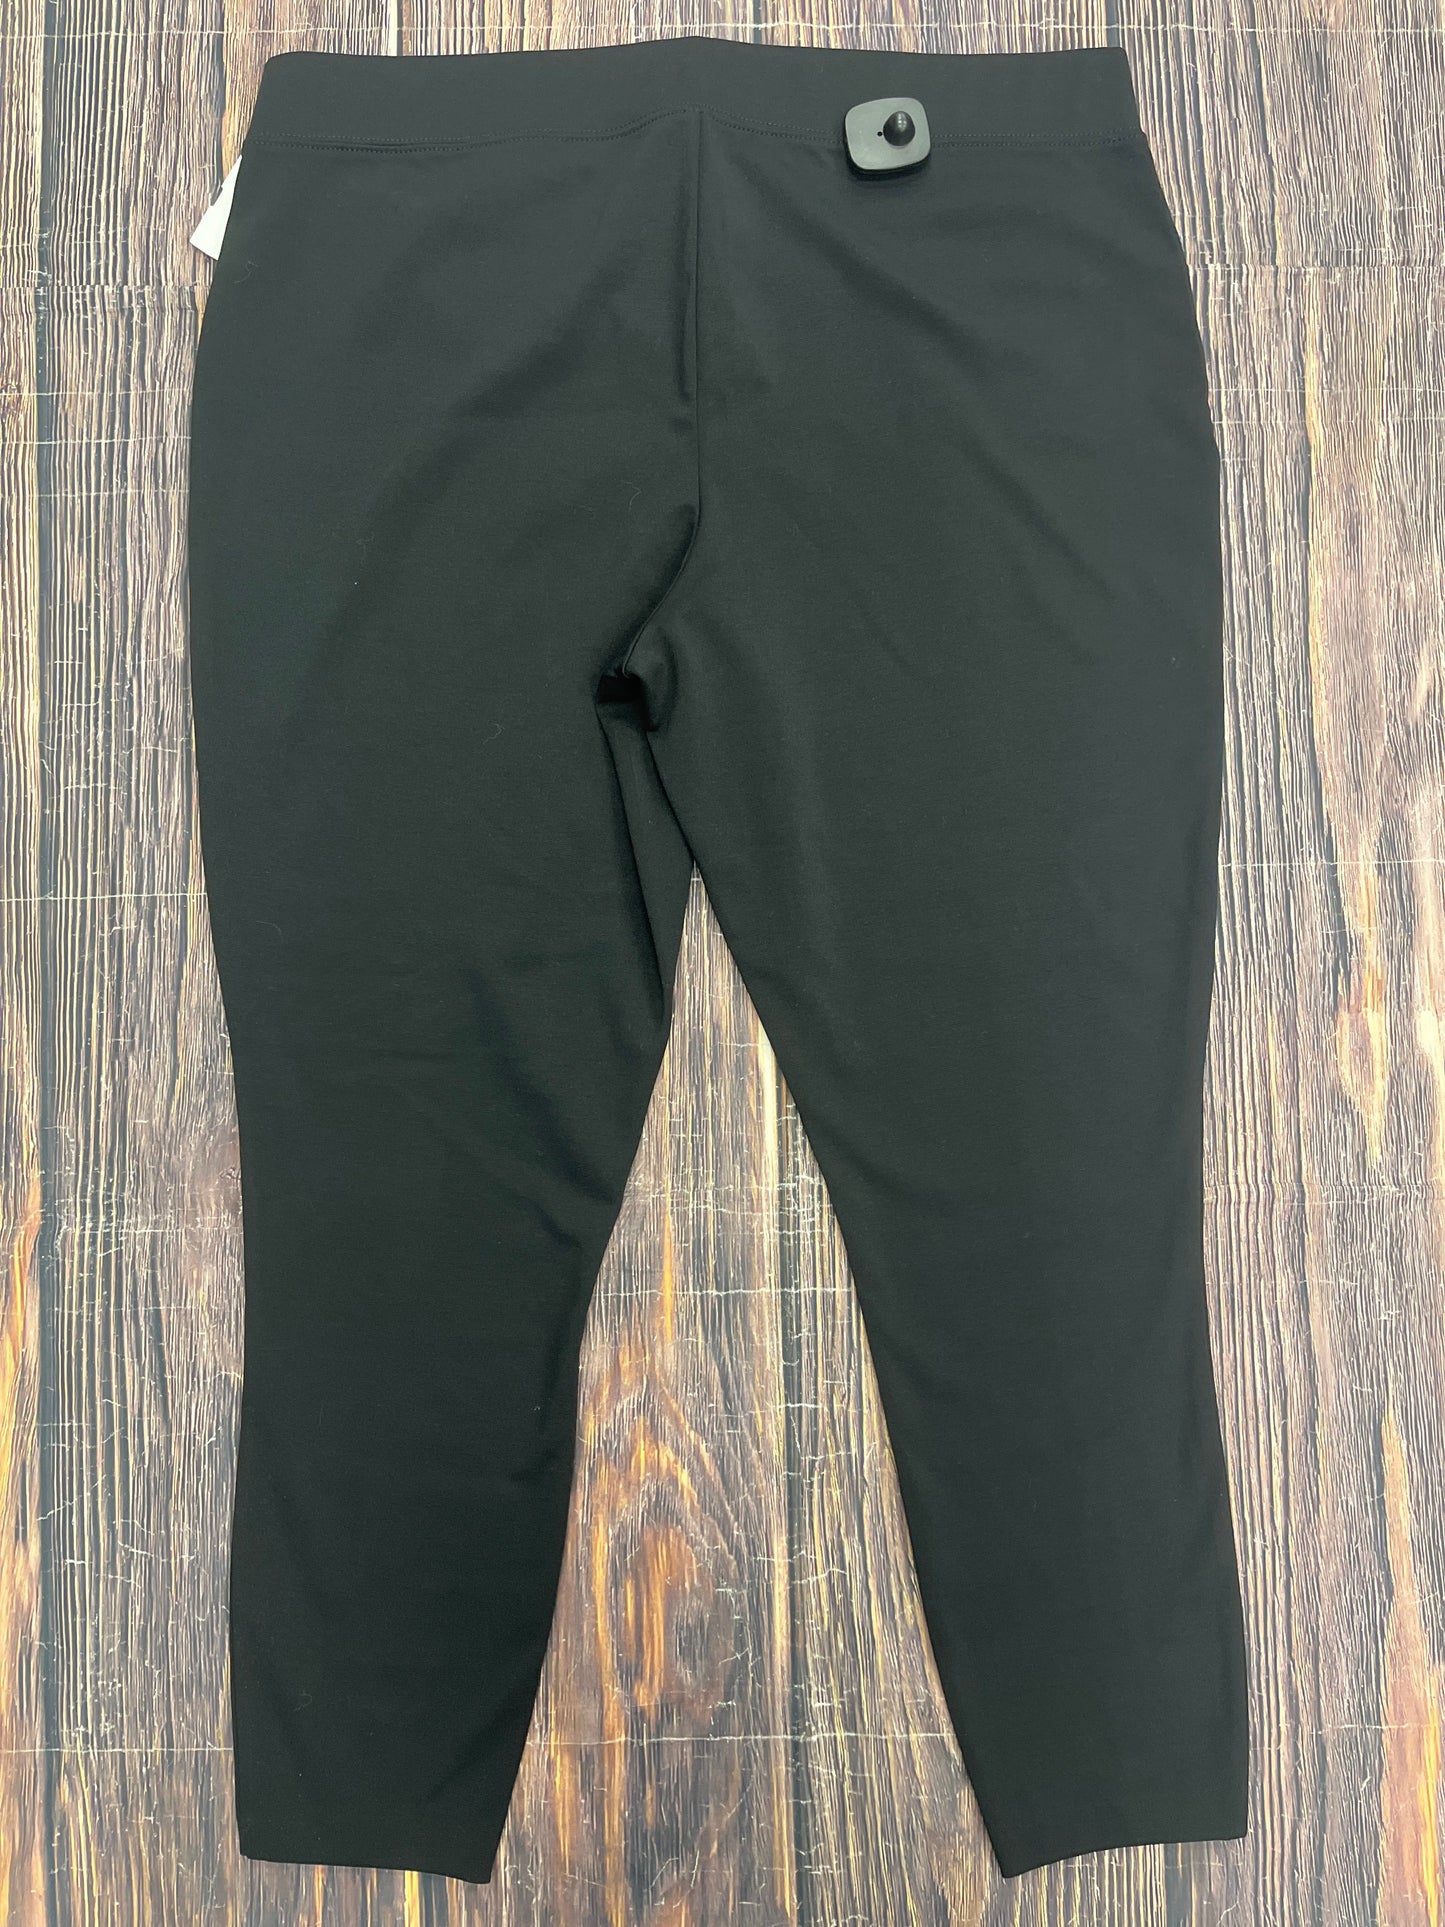 Black Pants Leggings Maurices, Size 1x